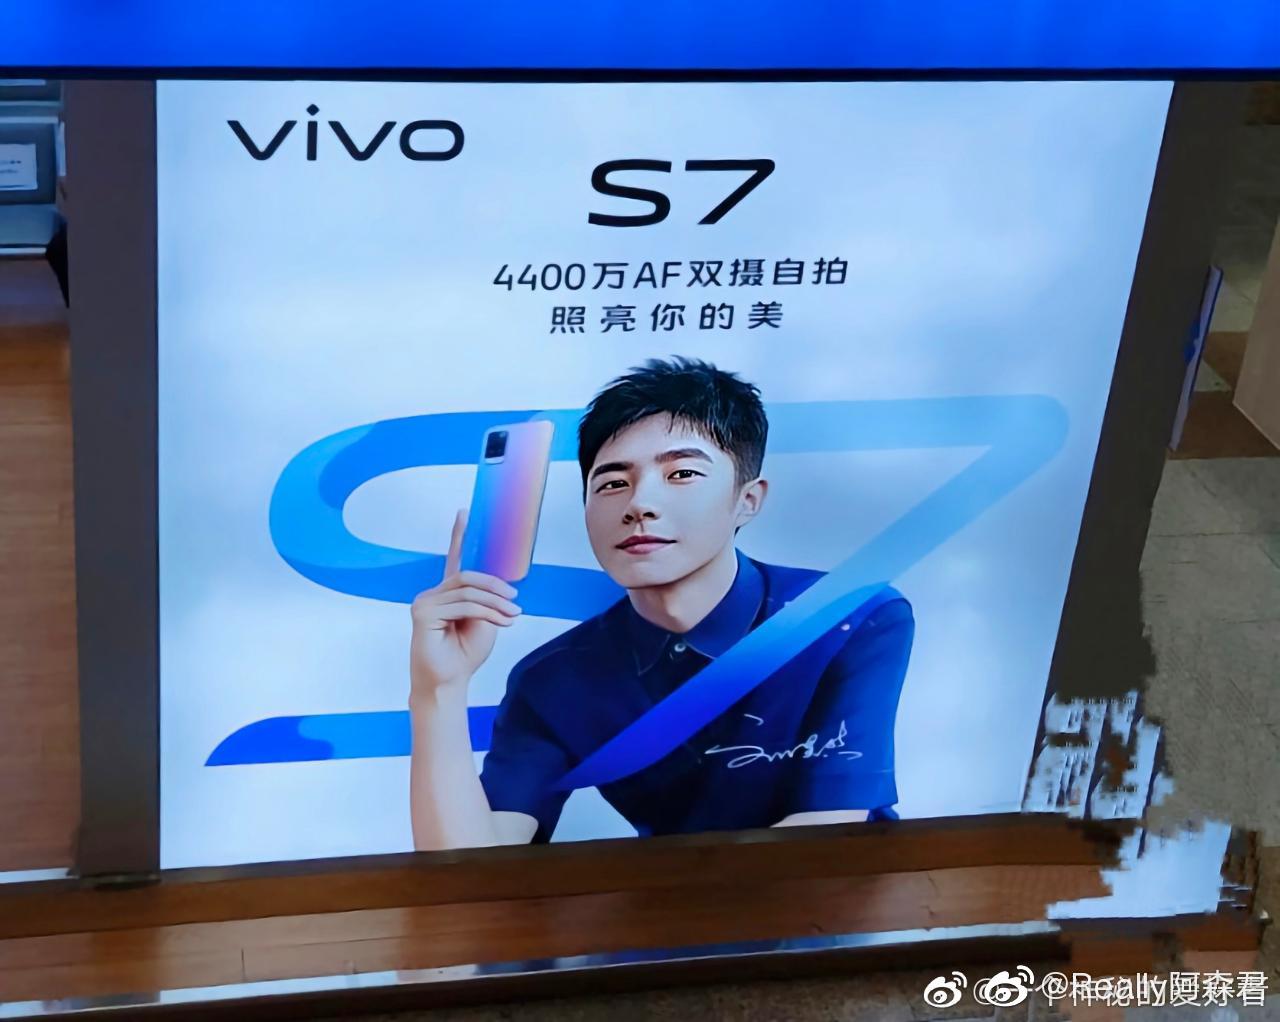 Vivo S7 5G design leak 1